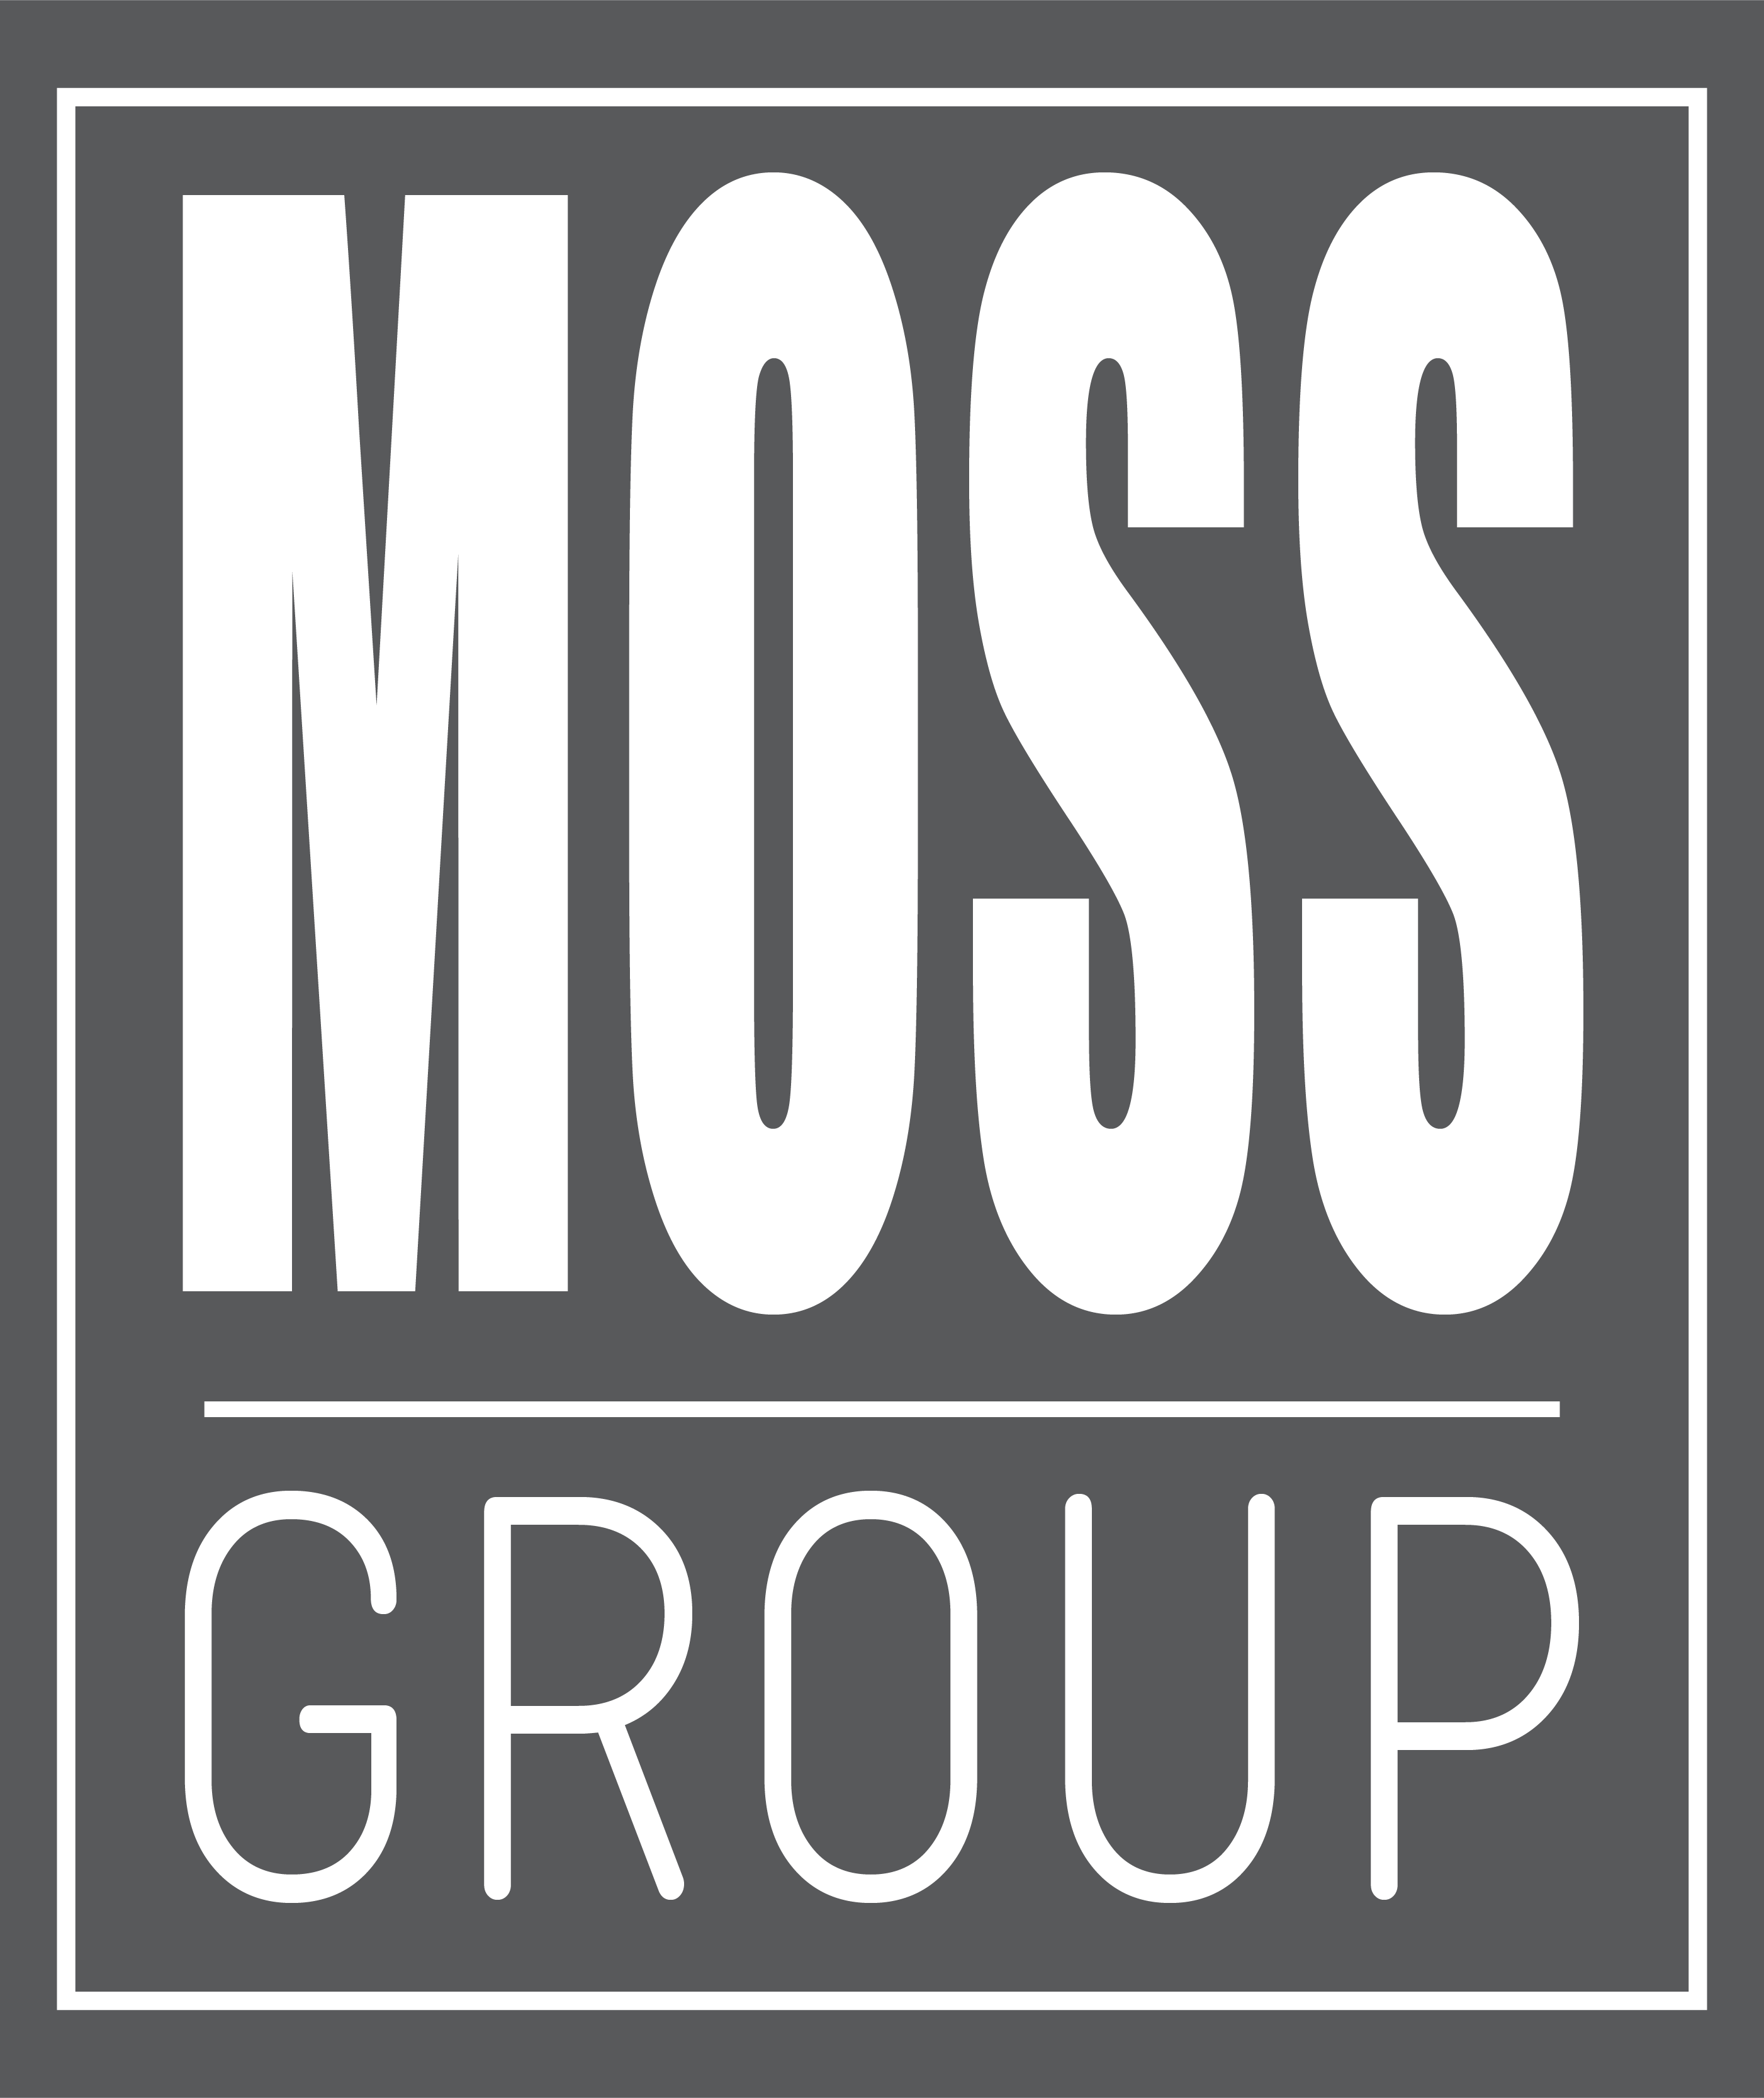 MOSS Group